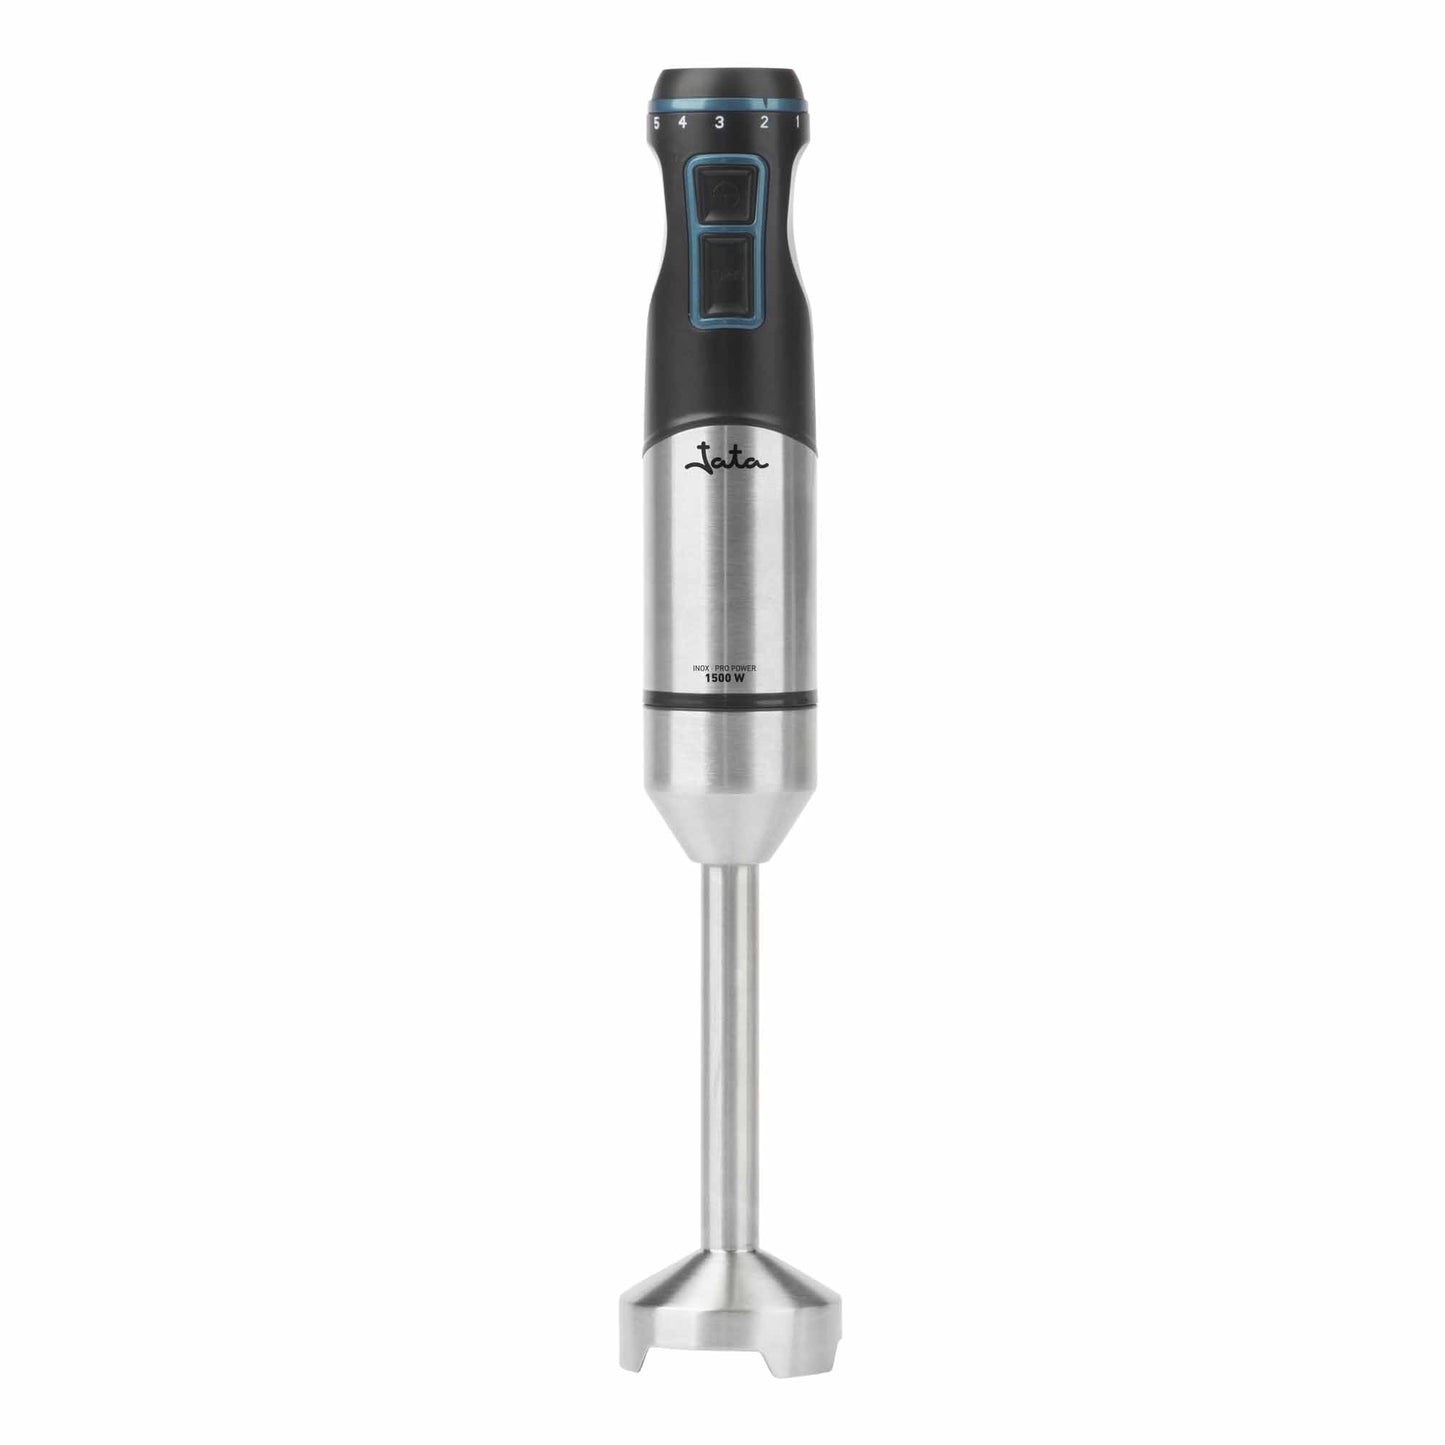 Blender with 1500W power, stainless steel leg, Jata JEBT1791